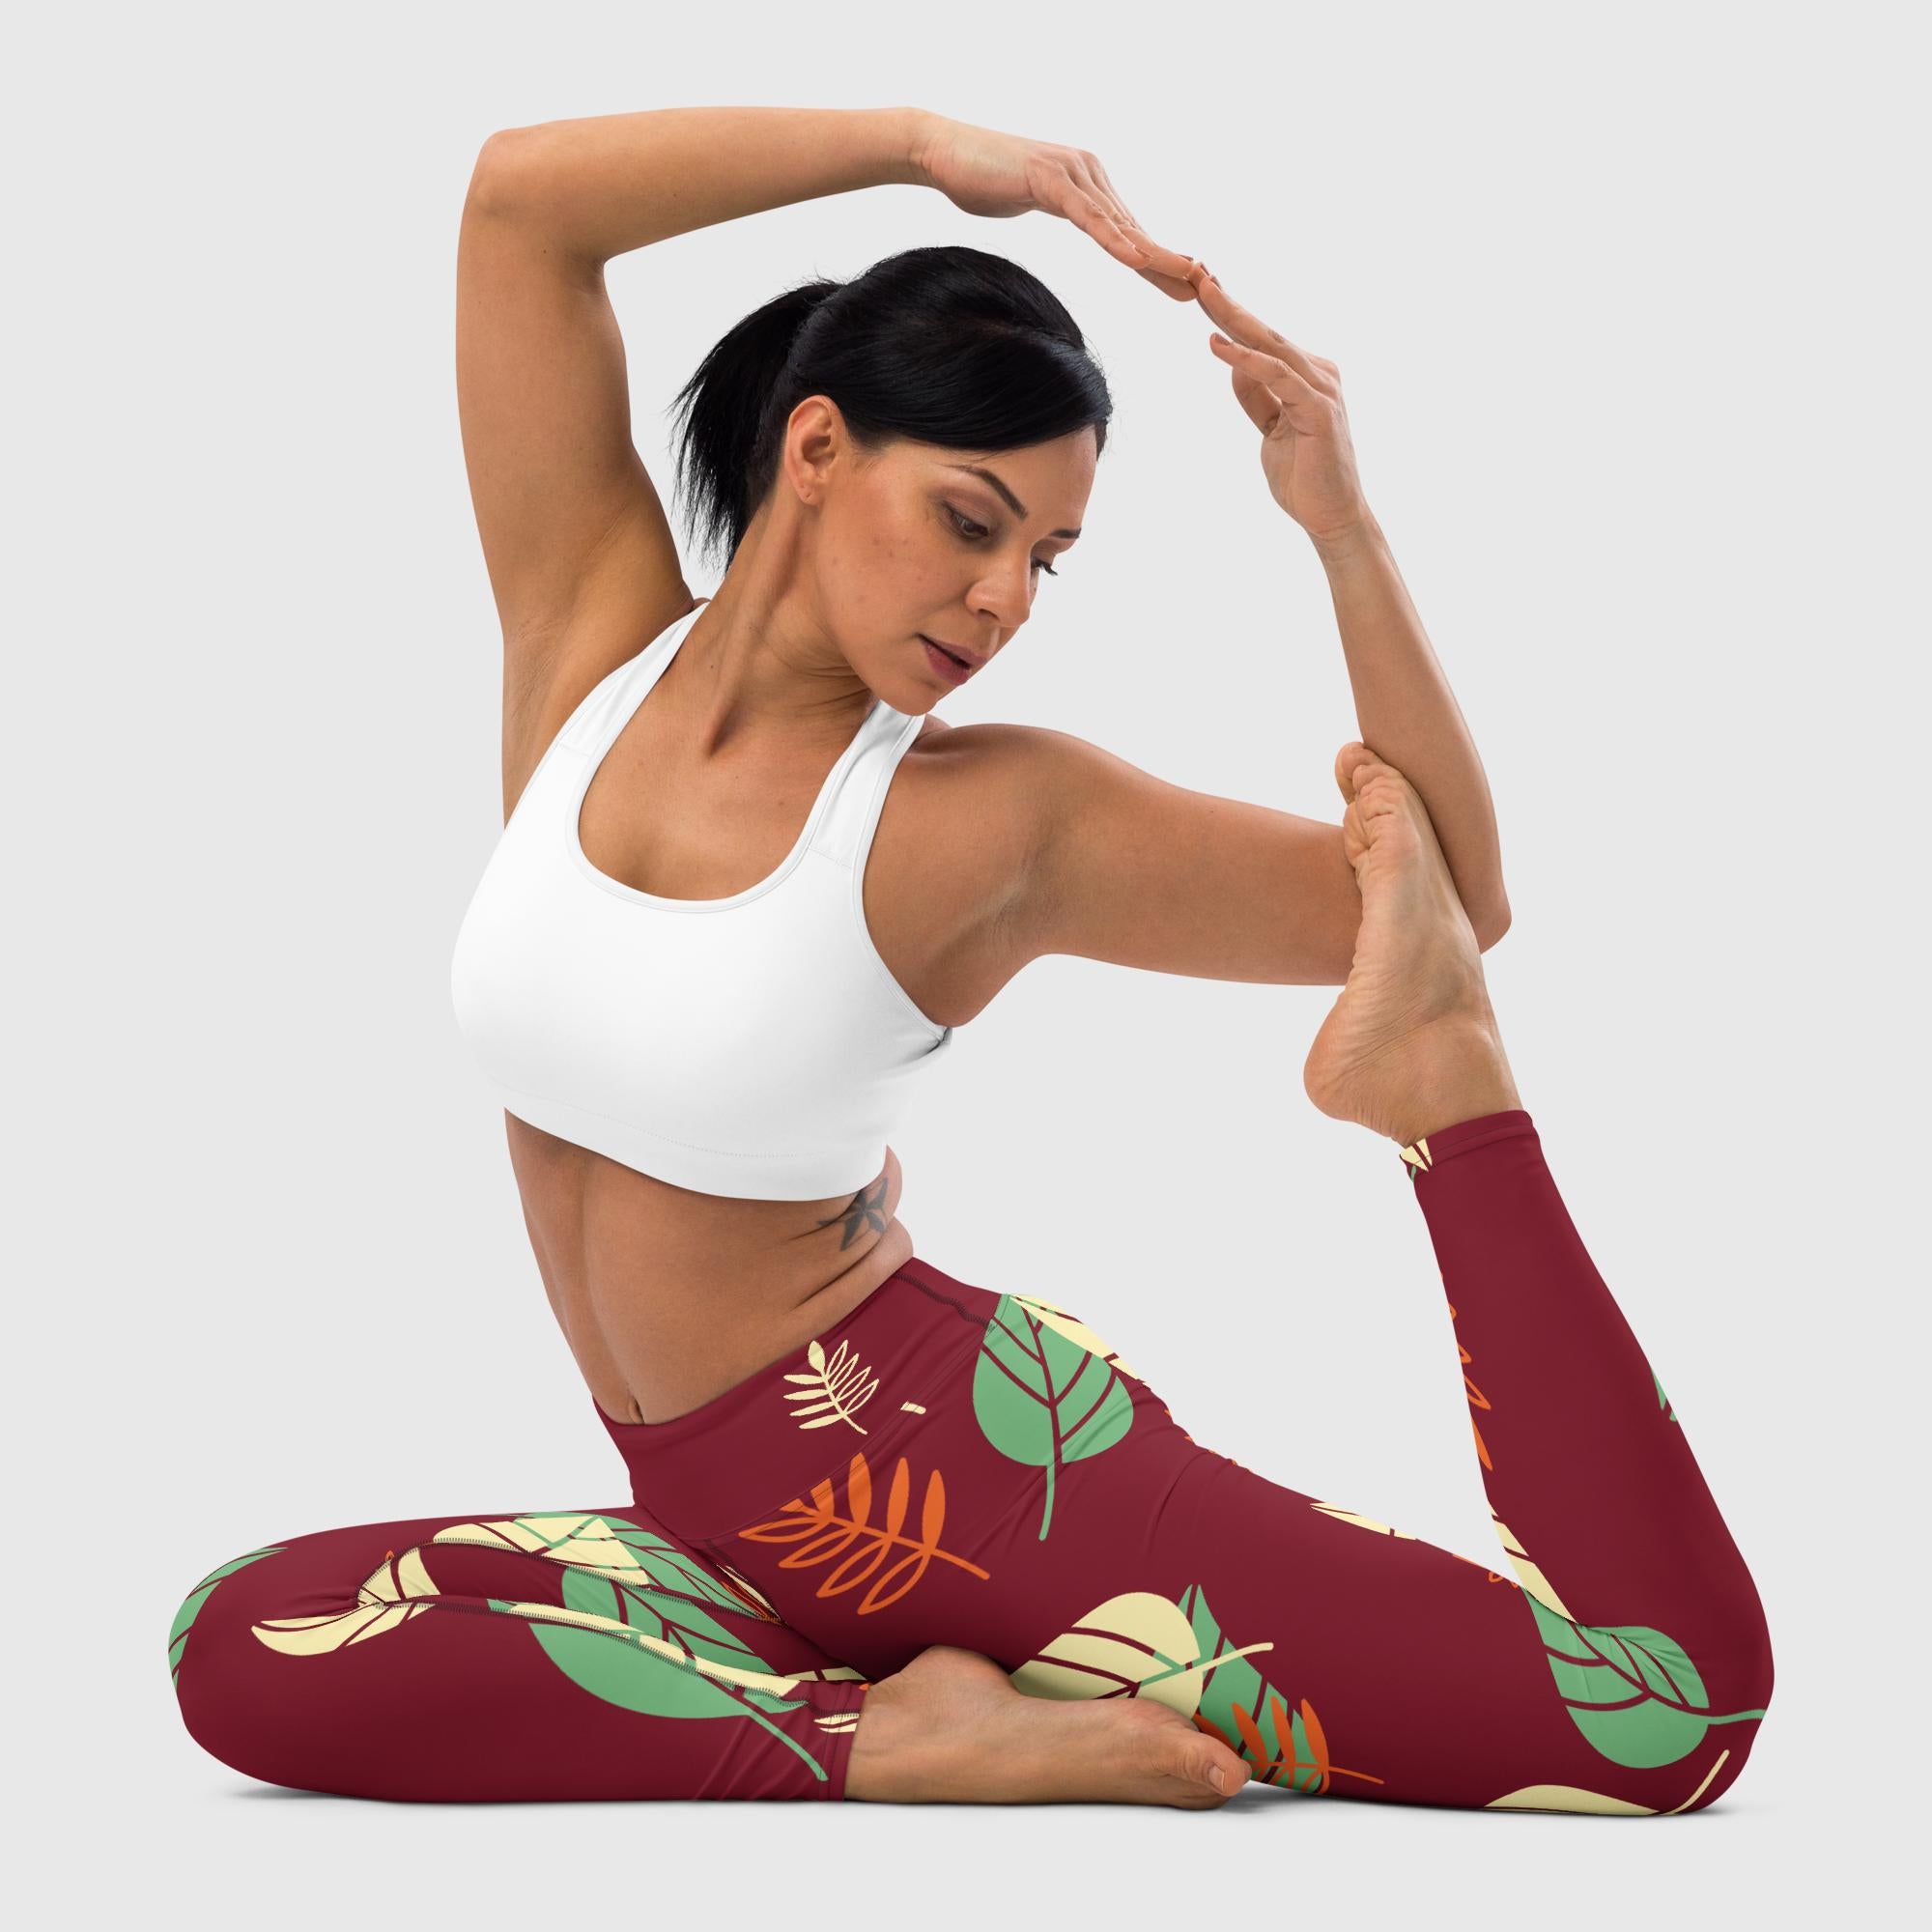 Flourishing Yoga Leggings | Women's Sports Wear - Revive Wear Flourishing Yoga Leggings. Supportive Fit. Precision cut and handmade. Flexible fit to your body shape. Shop Yoga Leggings with Free Shipping.